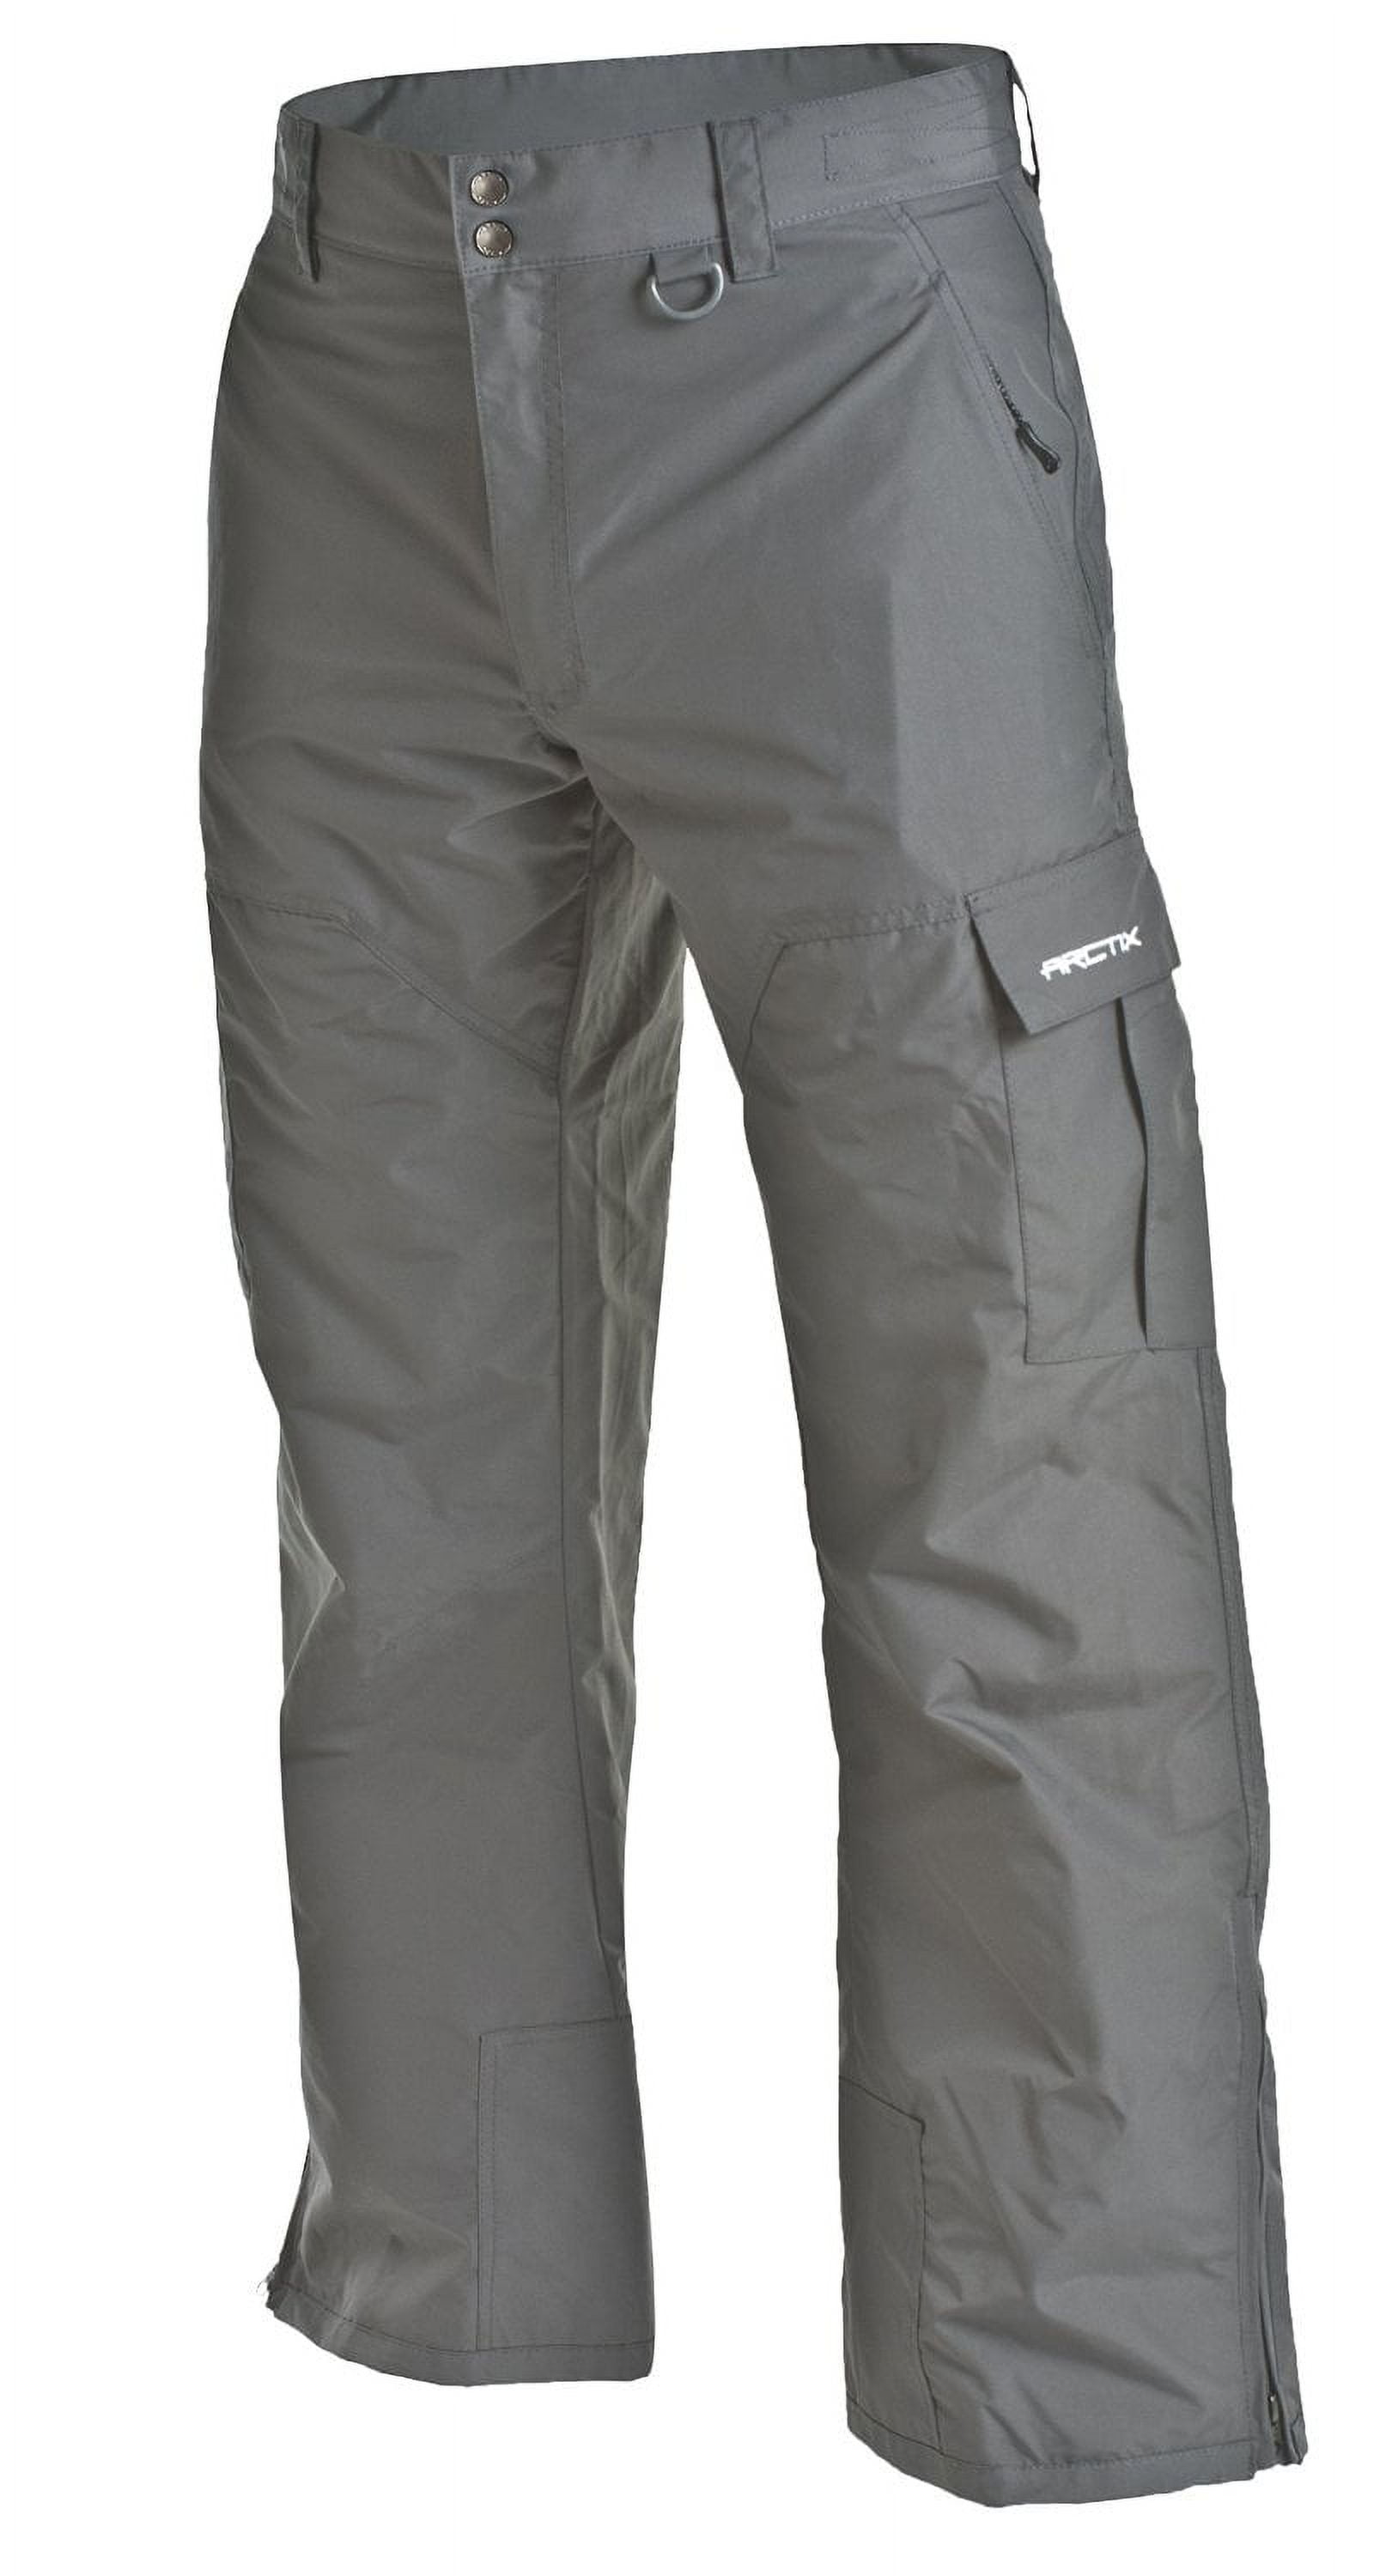 Item 860182 - Arctix 5k - Men's Snowboard Pants - Size L